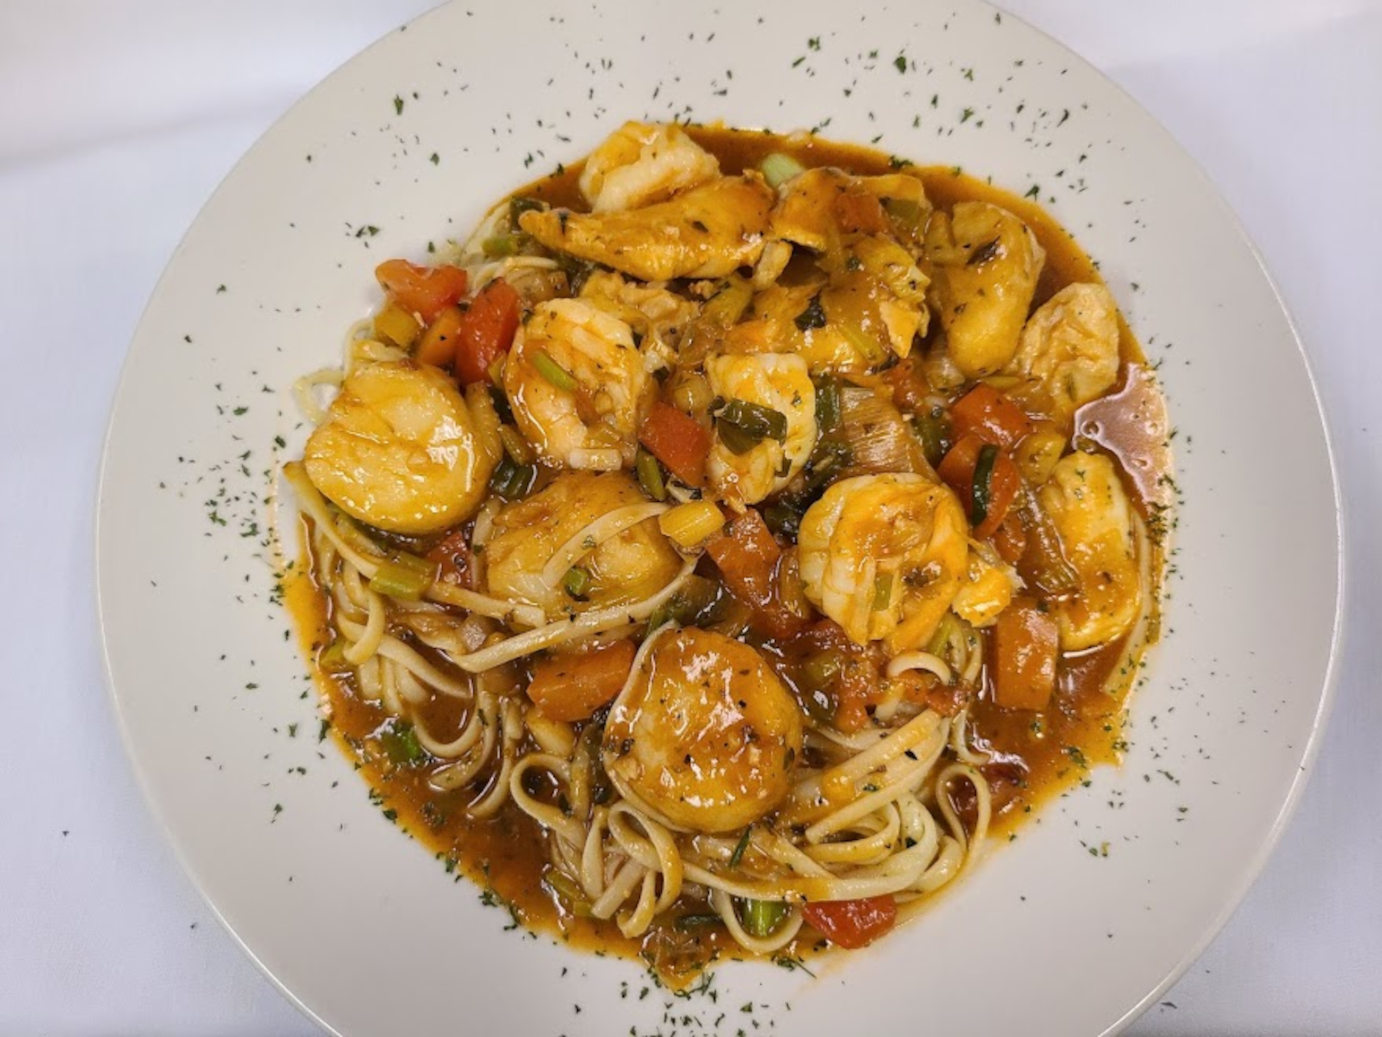 Shrimps, pasta, and mixed vegetables